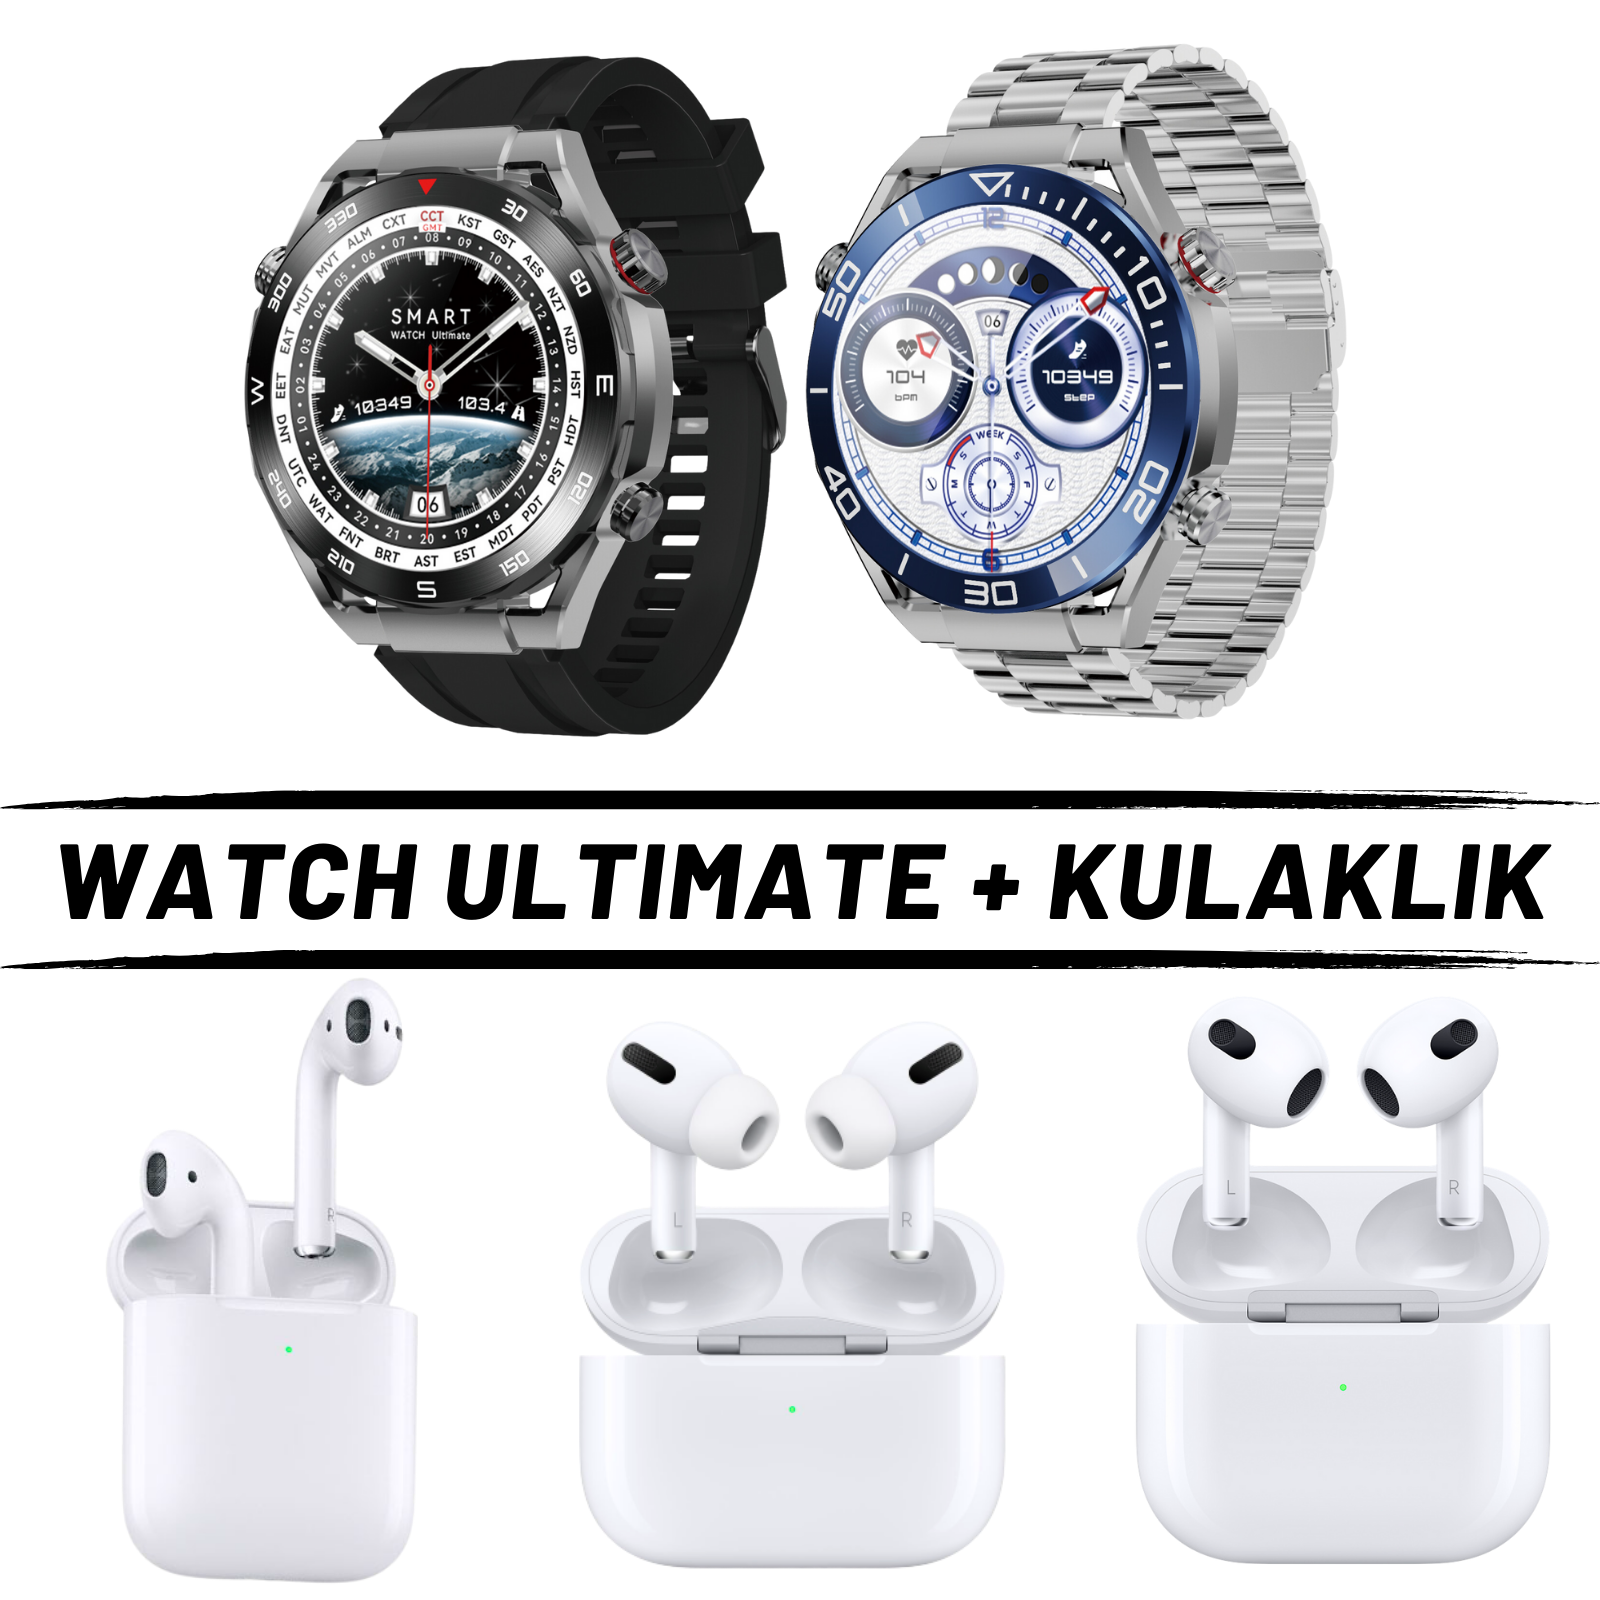 Watch G3 Ultimax Akıllı Saat + Kulaklık